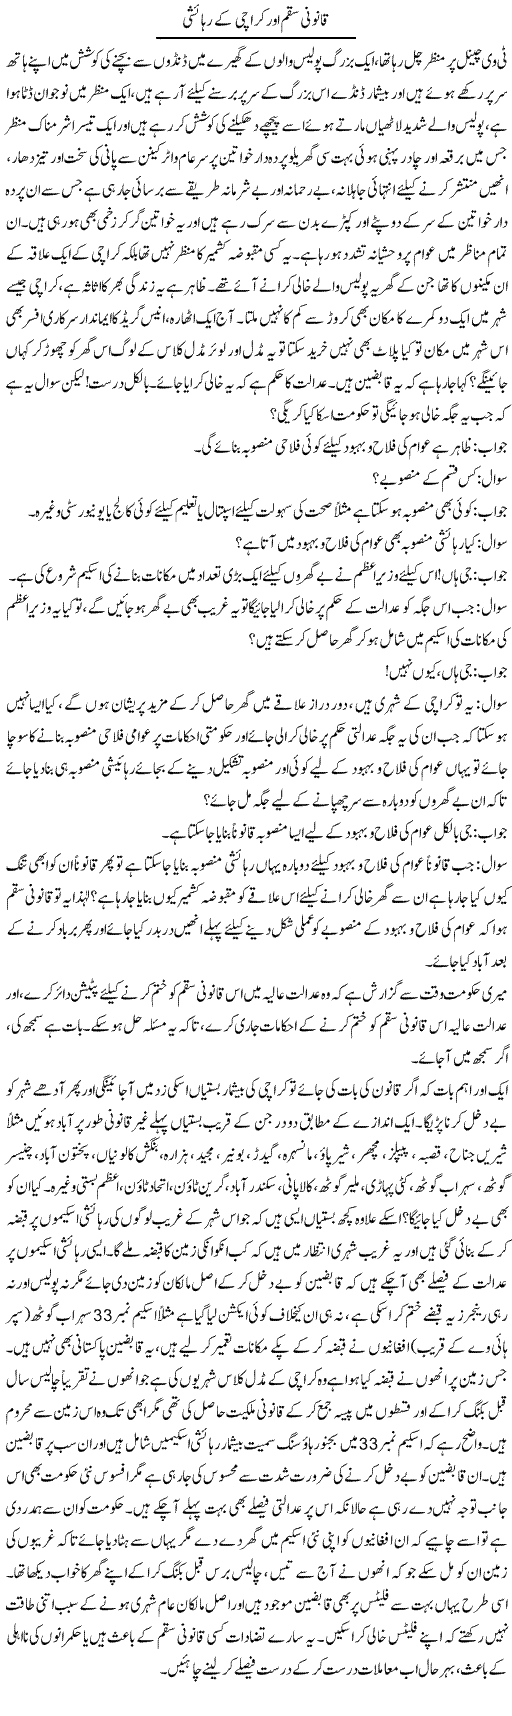 Qanooni Suqam Aor Karachi Ke Rehaishi | Naveed Iqbal Ansari | Daily Urdu Columns